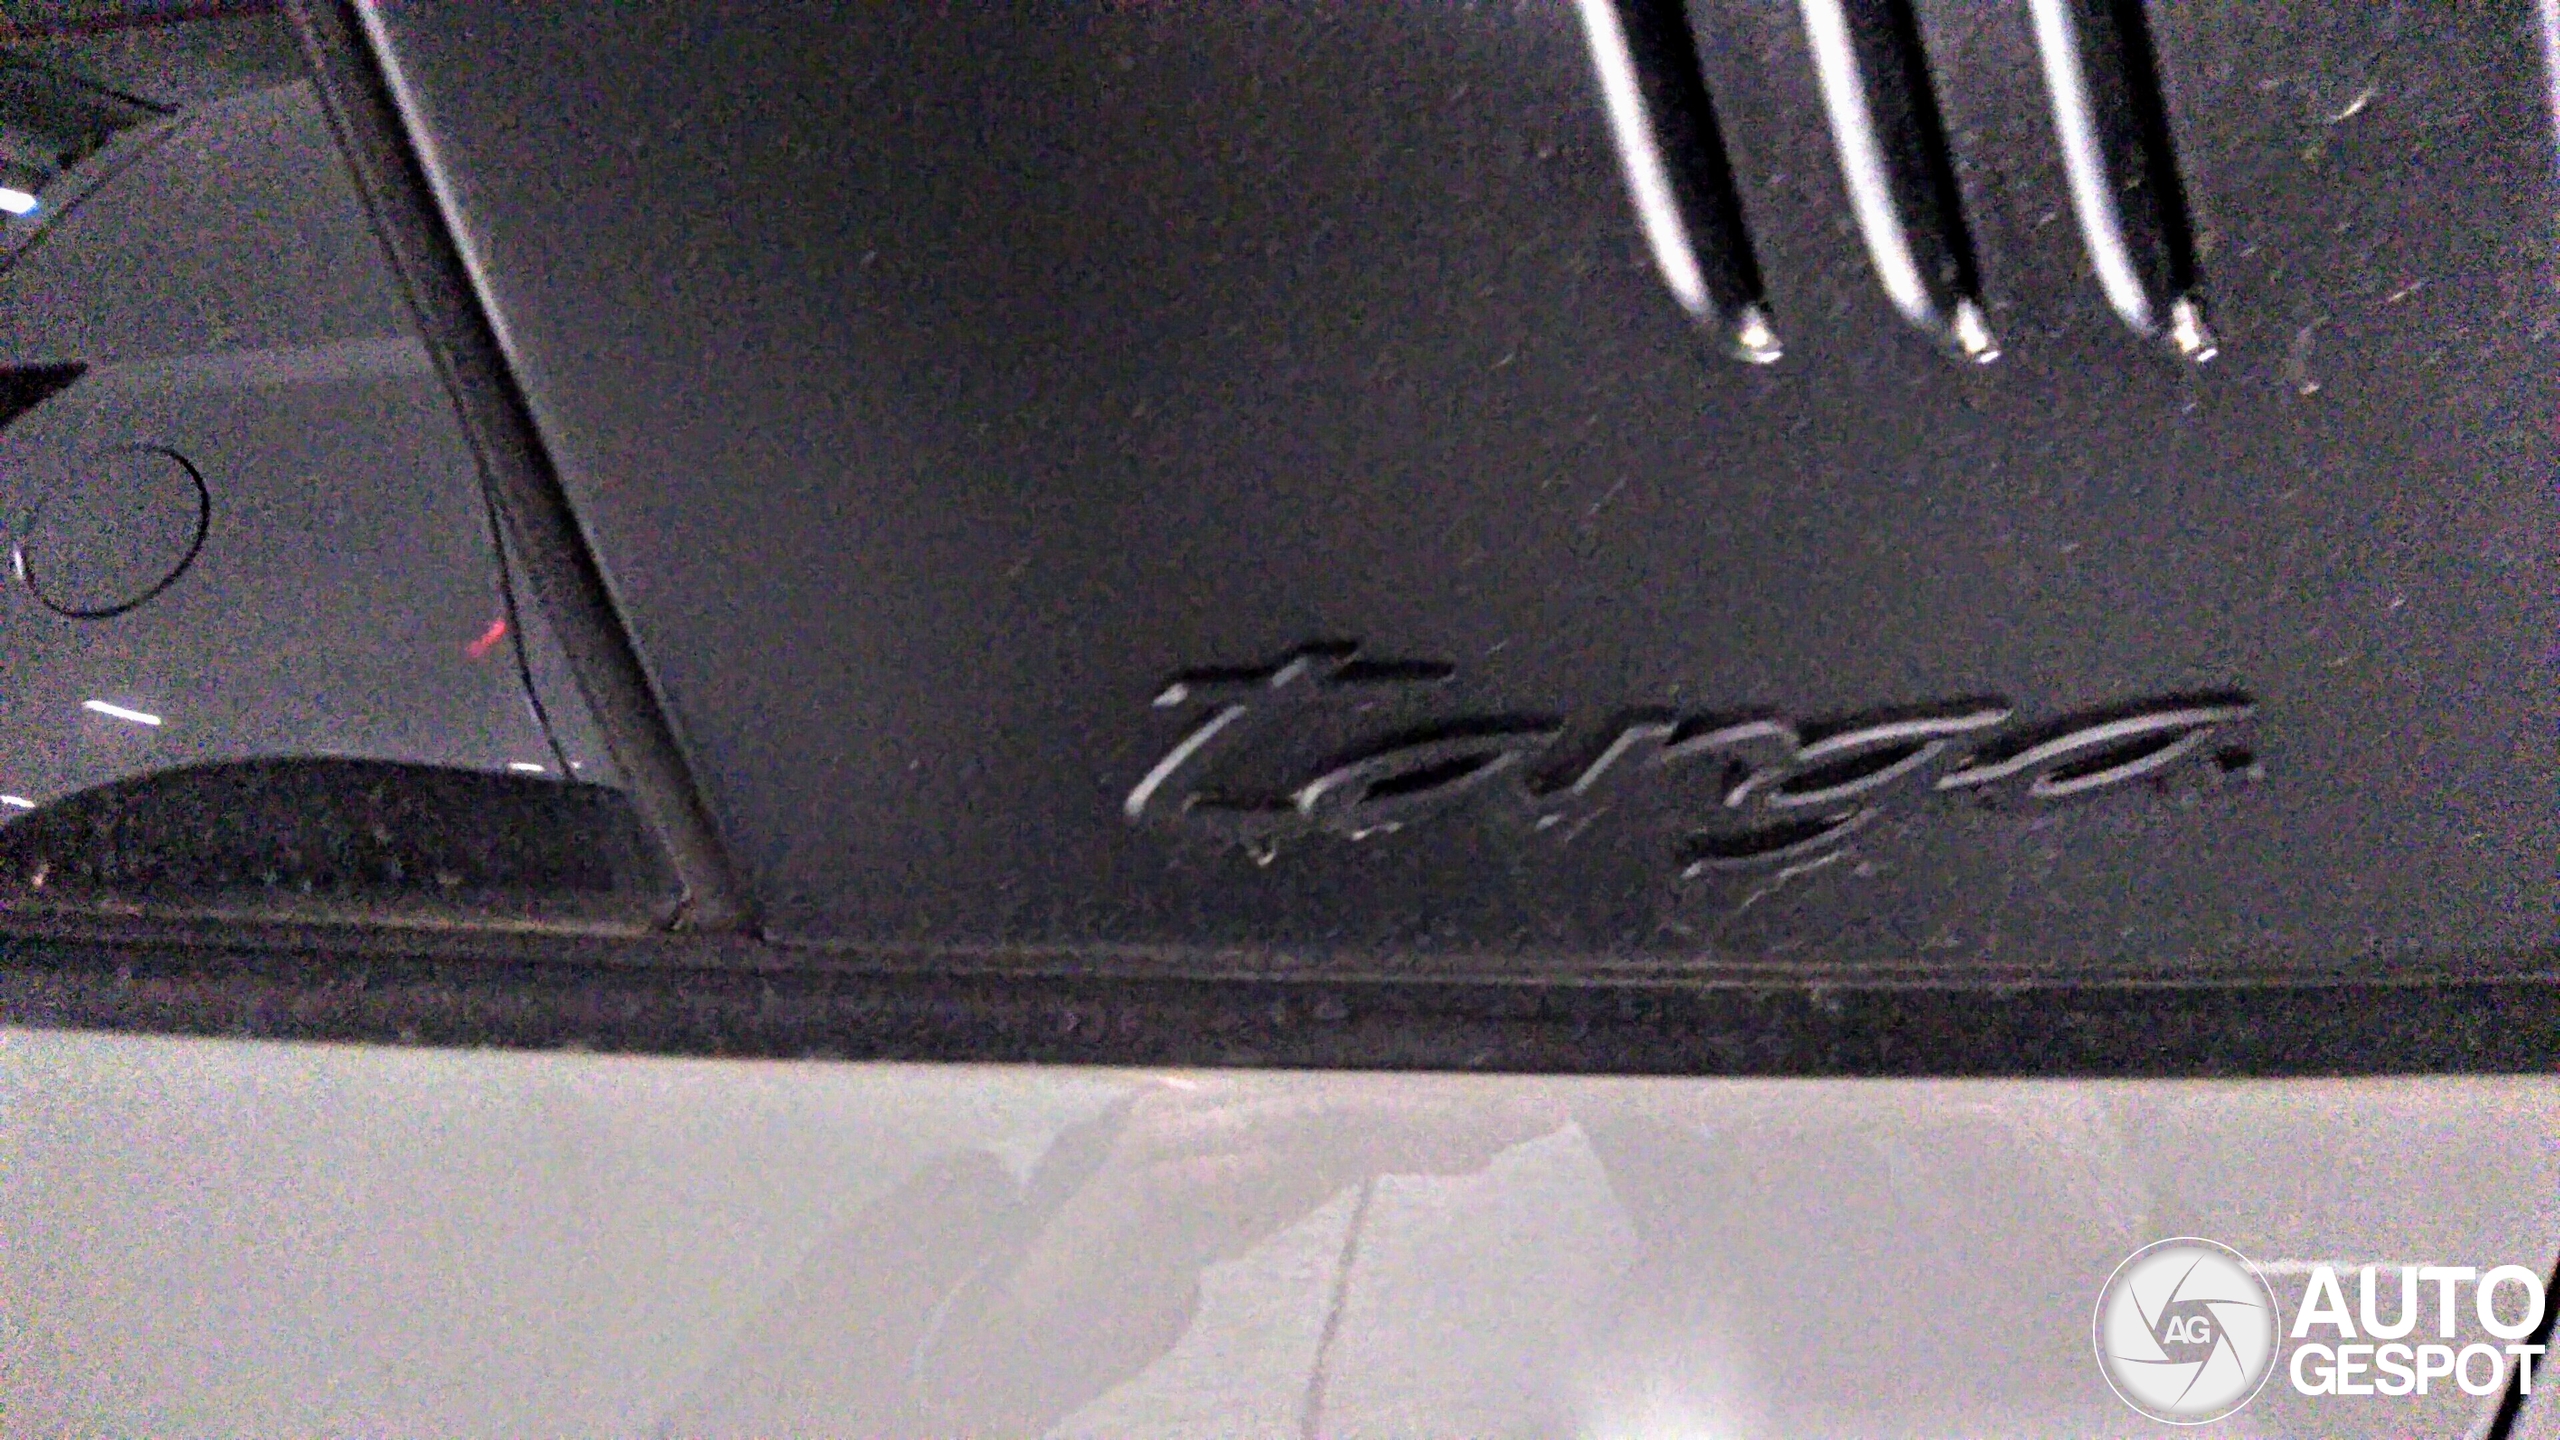 Porsche 992 Targa 4 GTS